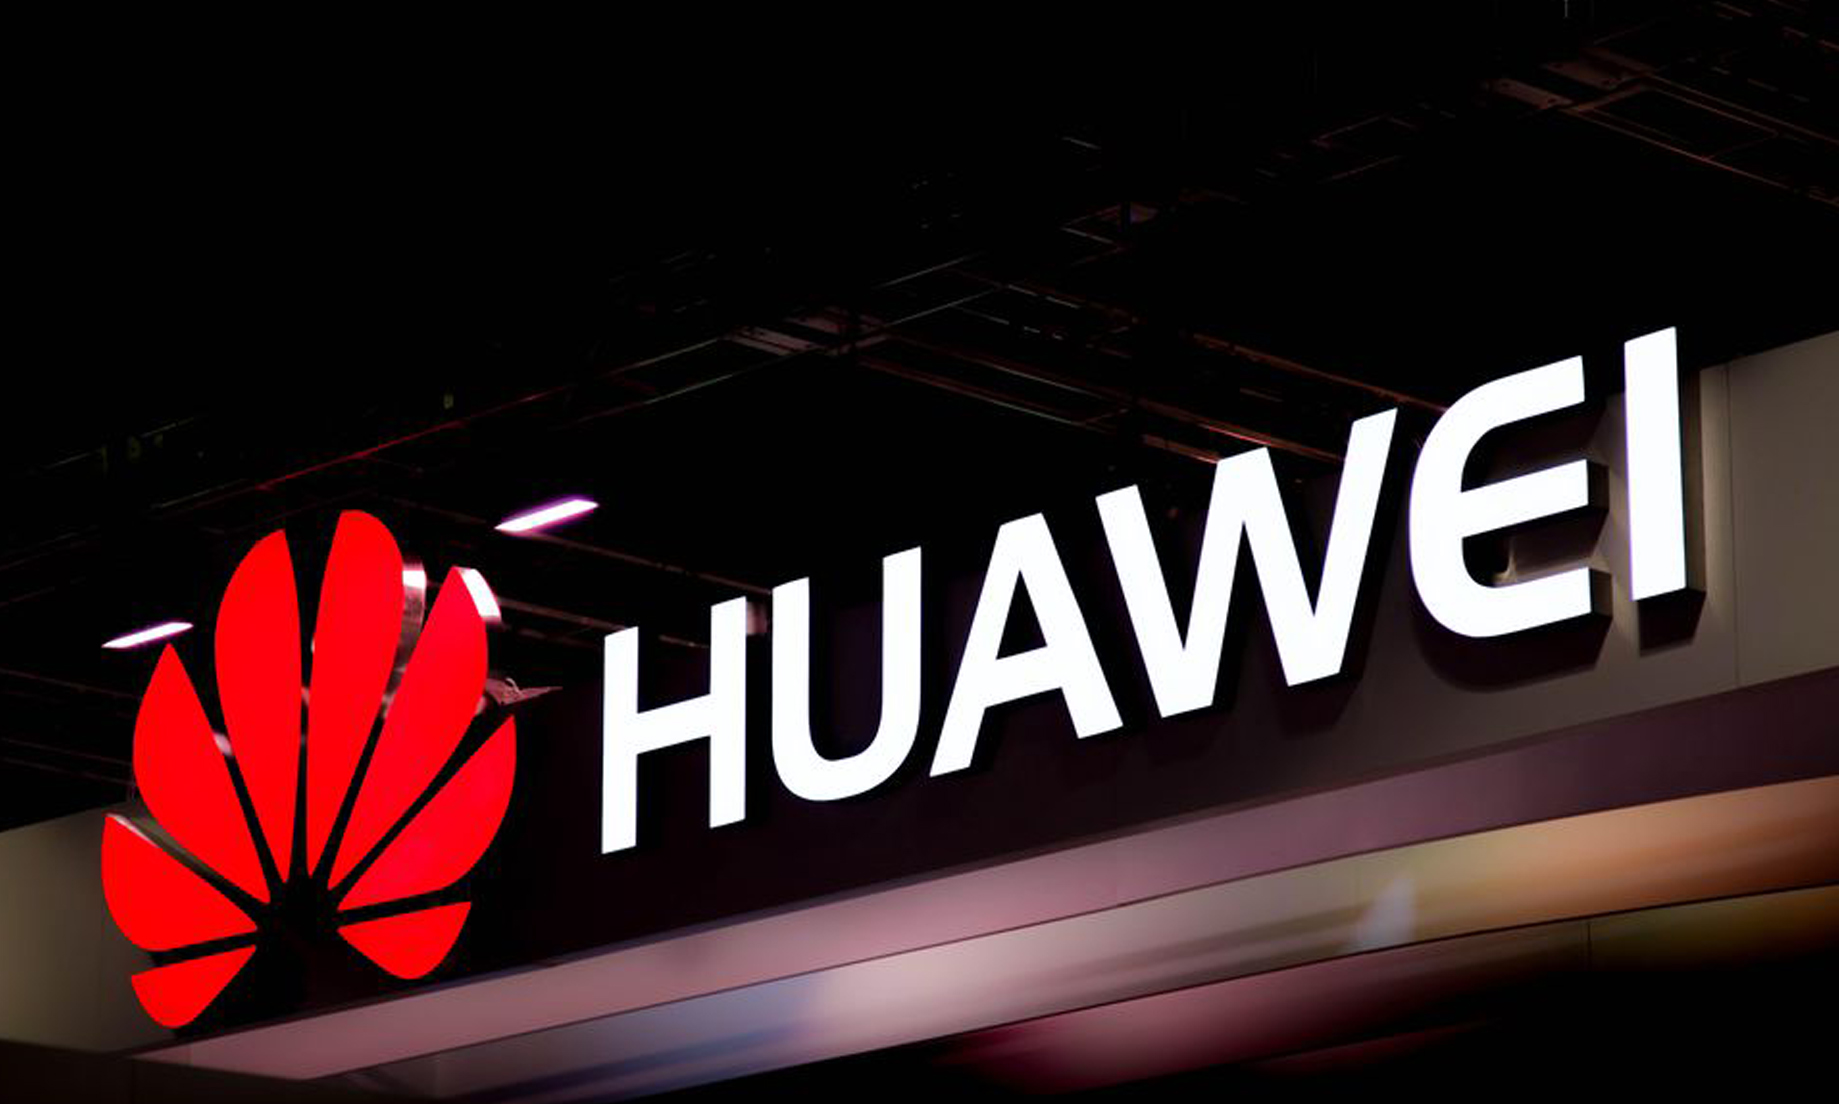 Europe’s scrutiny results prove Huawei “innocent”: China FM spokesperson